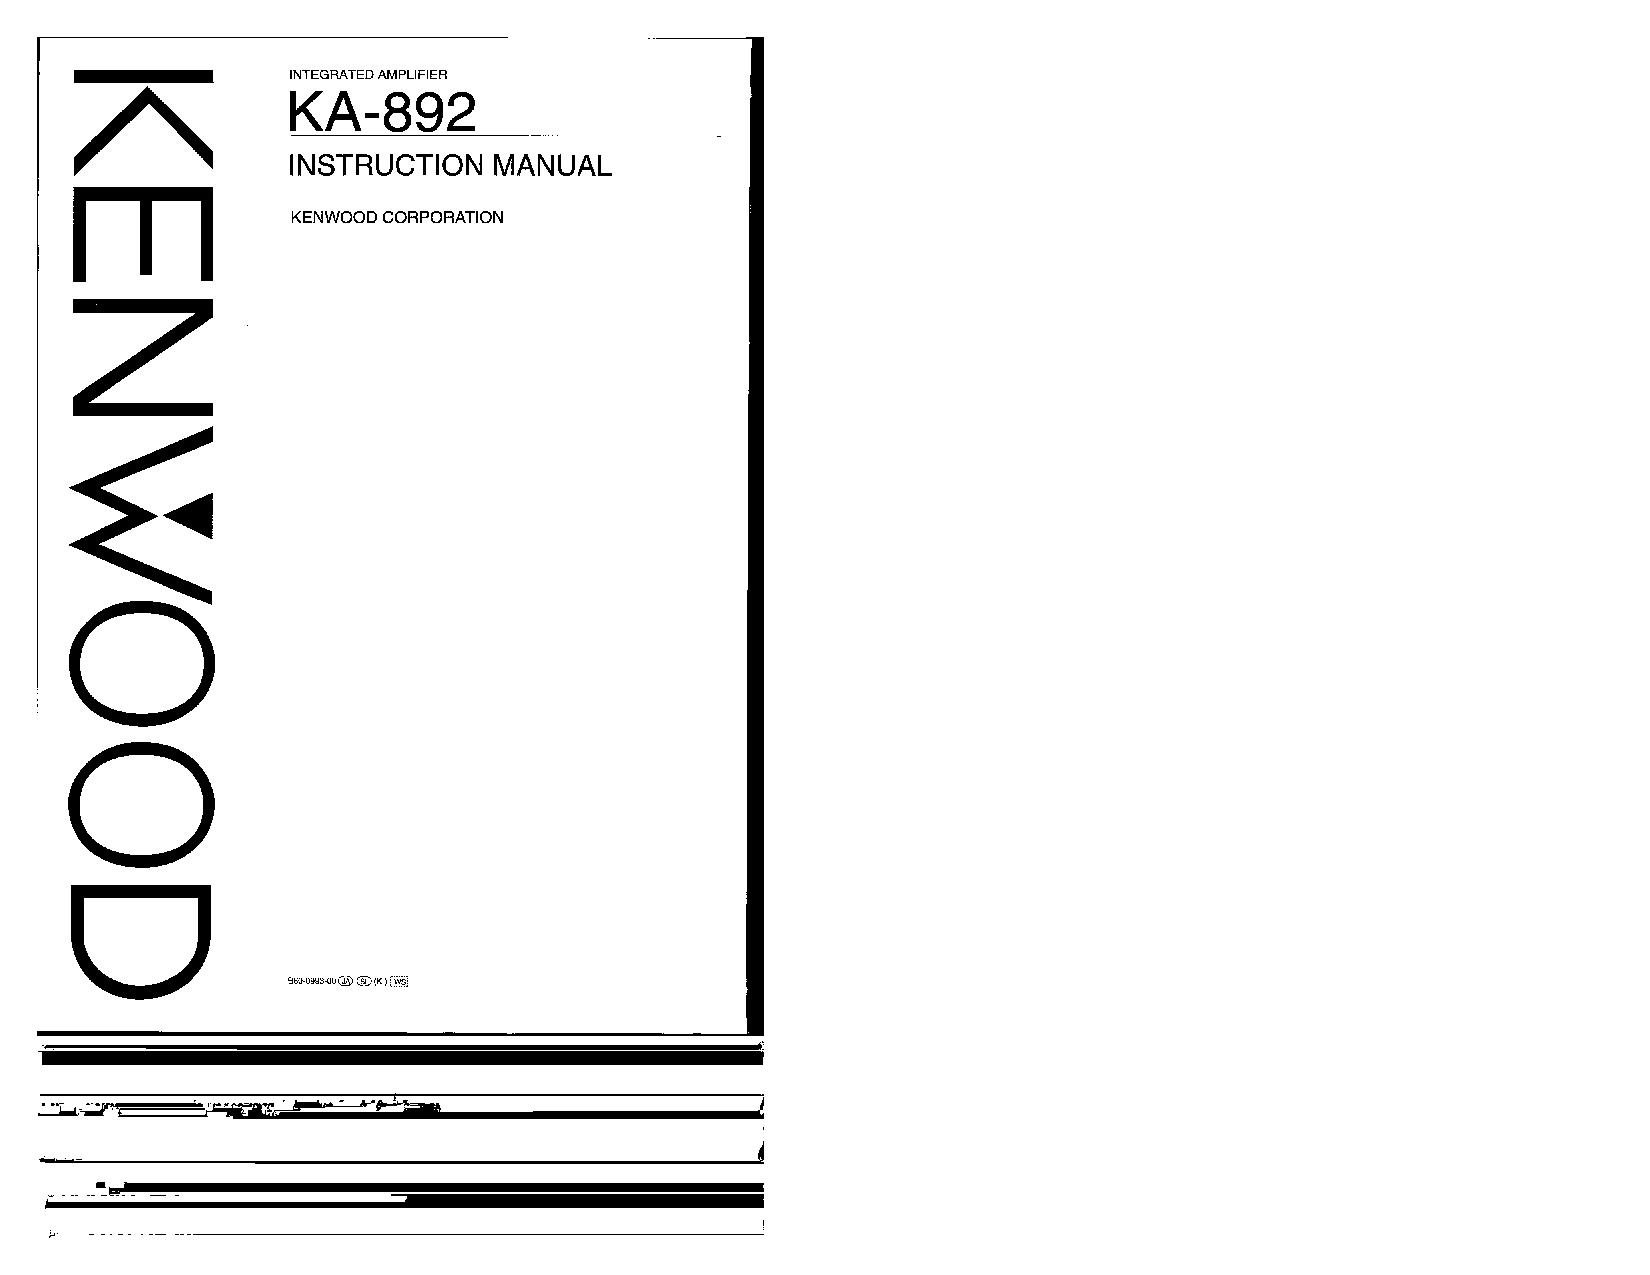 Kenwood KA-892 User Manual